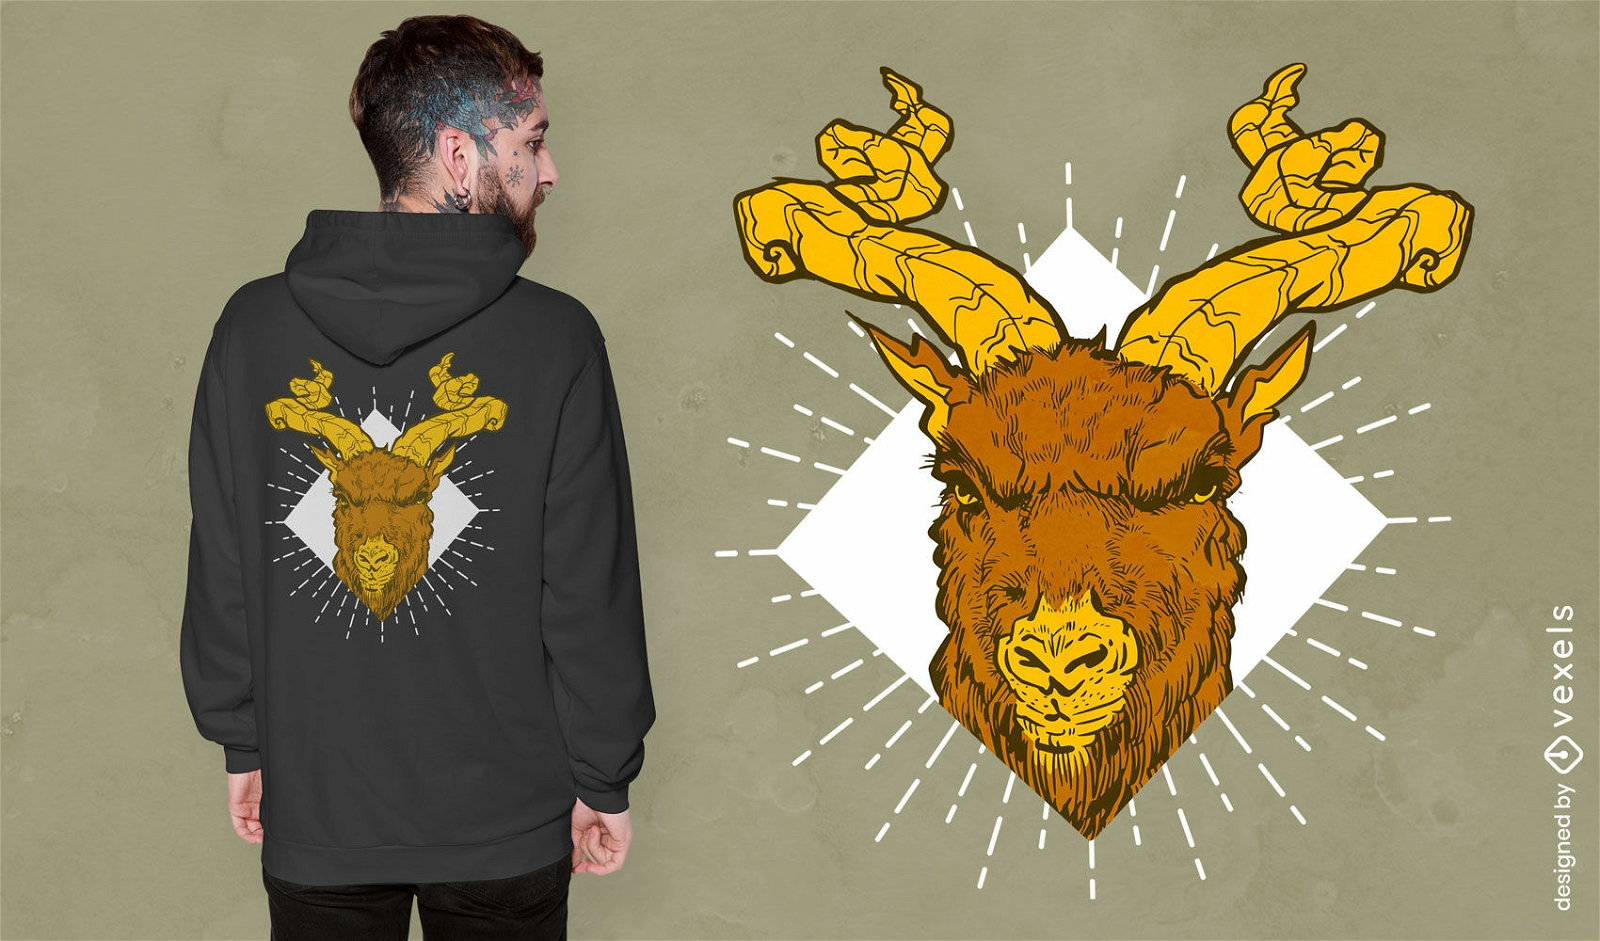 Angry goat farm animal t-shirt design